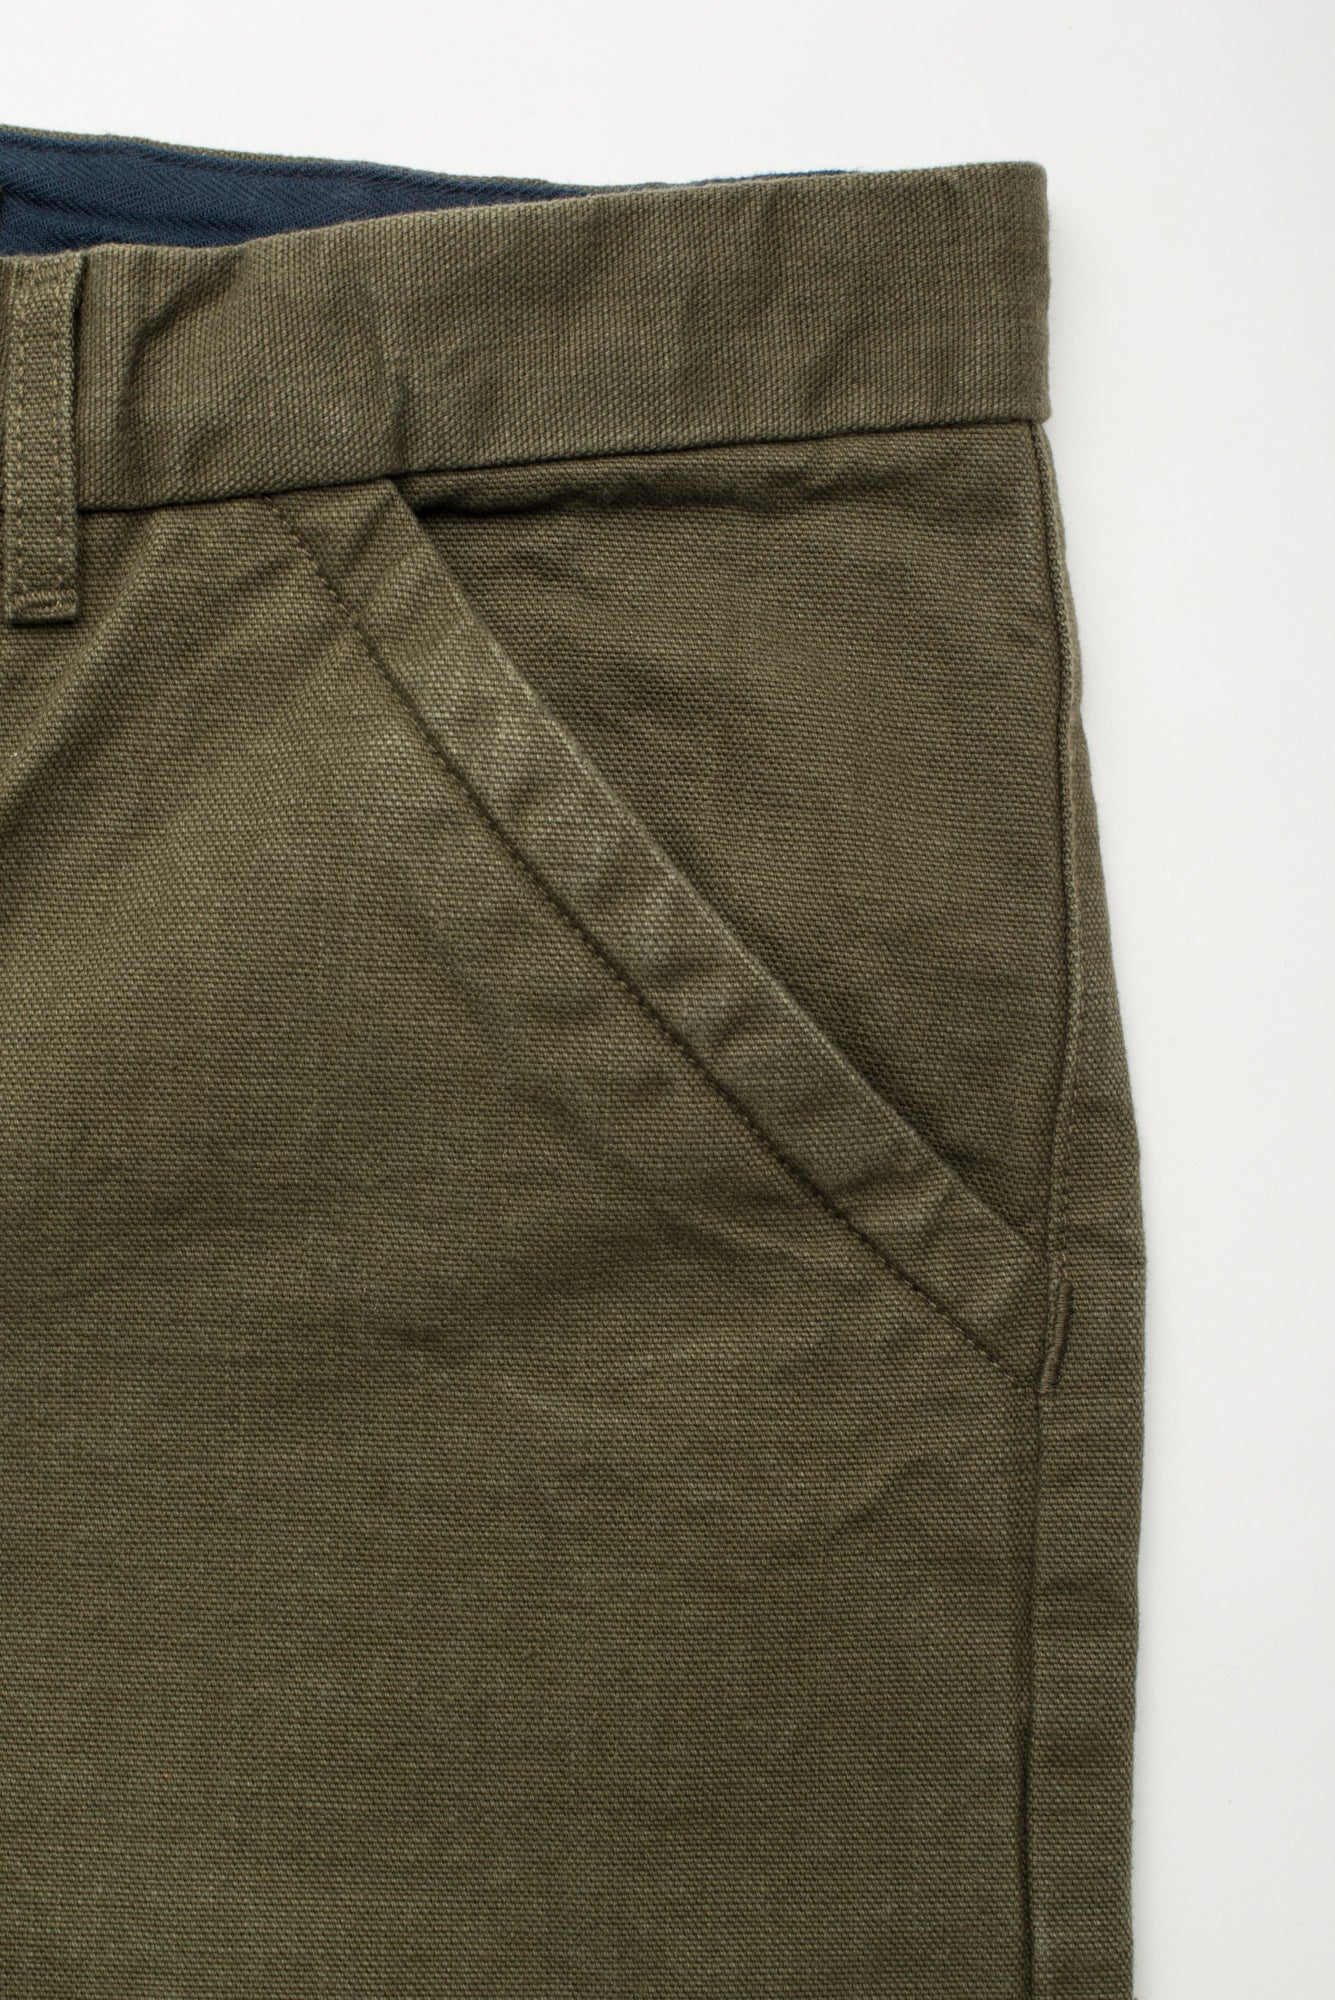 Workers Chino Slim Fit | 14 Ounce Slub Army Green – Freenote Cloth